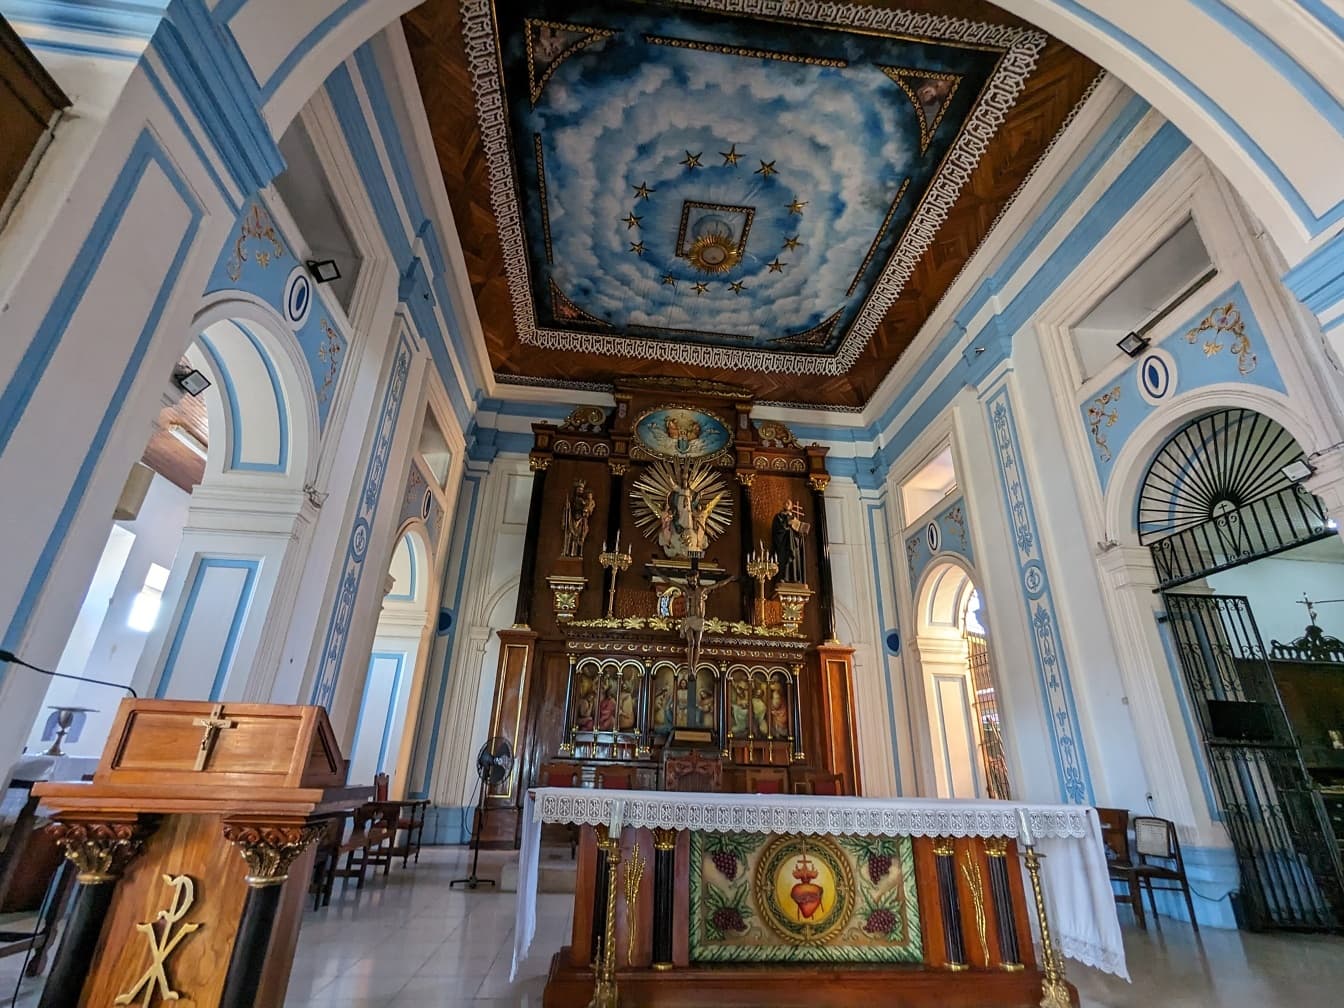 Interior of the Xalteva church in Granada in Nicaragua with mural on ceiling